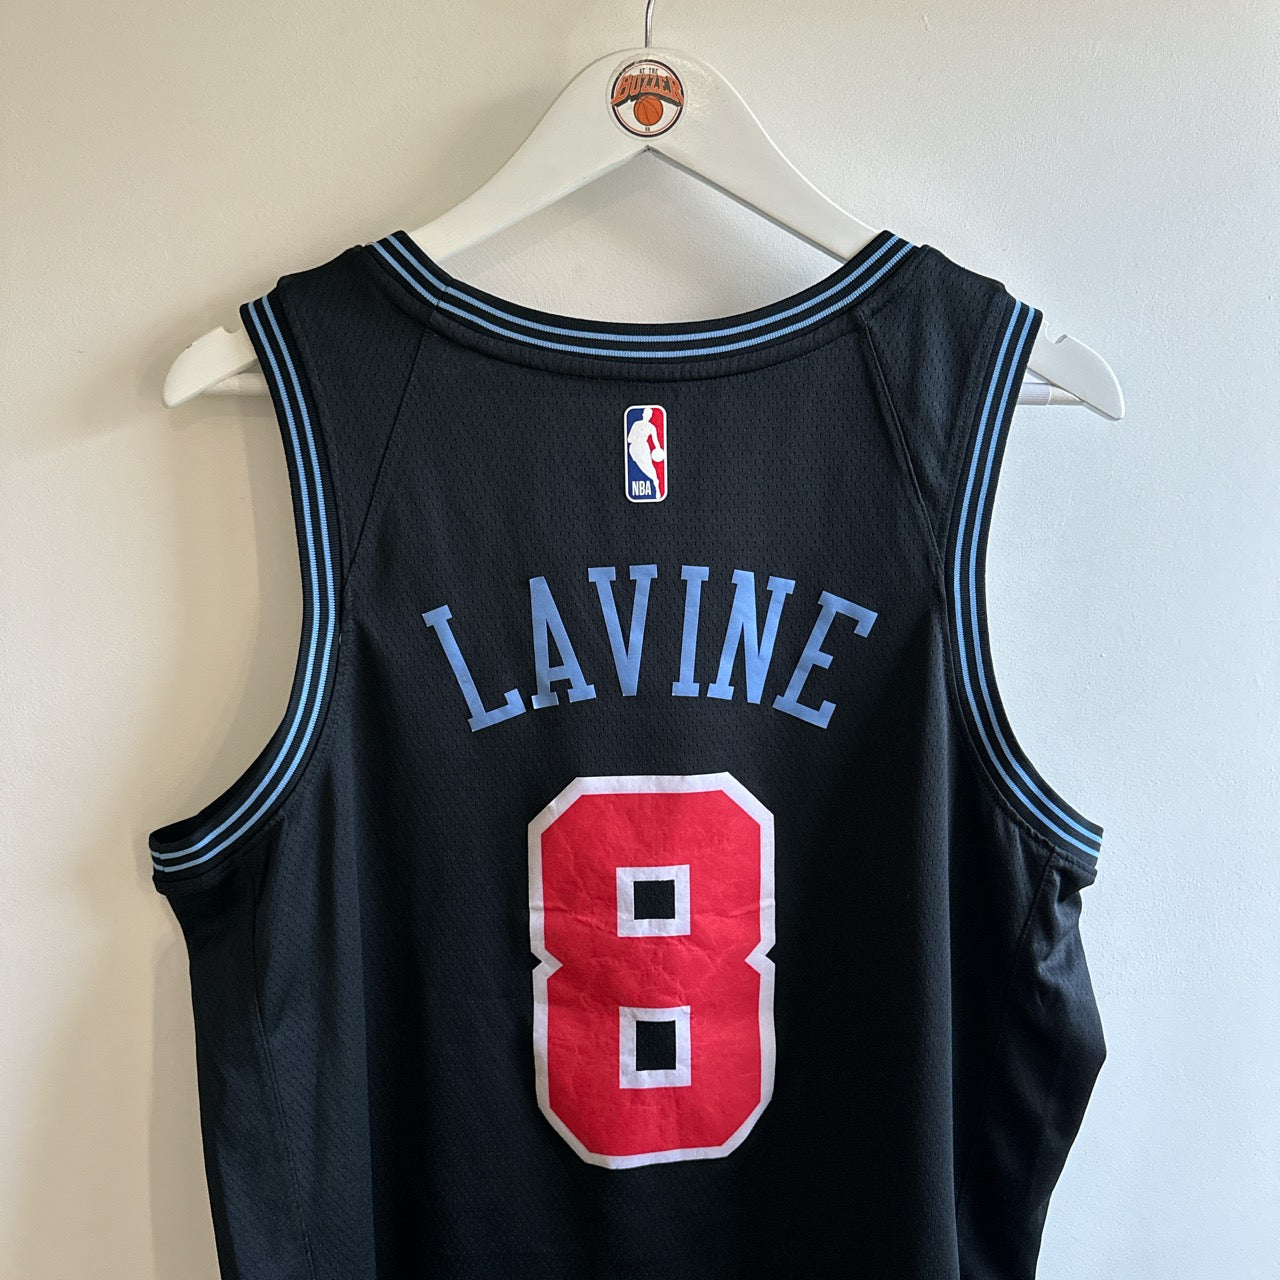 Chicago Bulls Zach Lavine Nike jersey - Medium